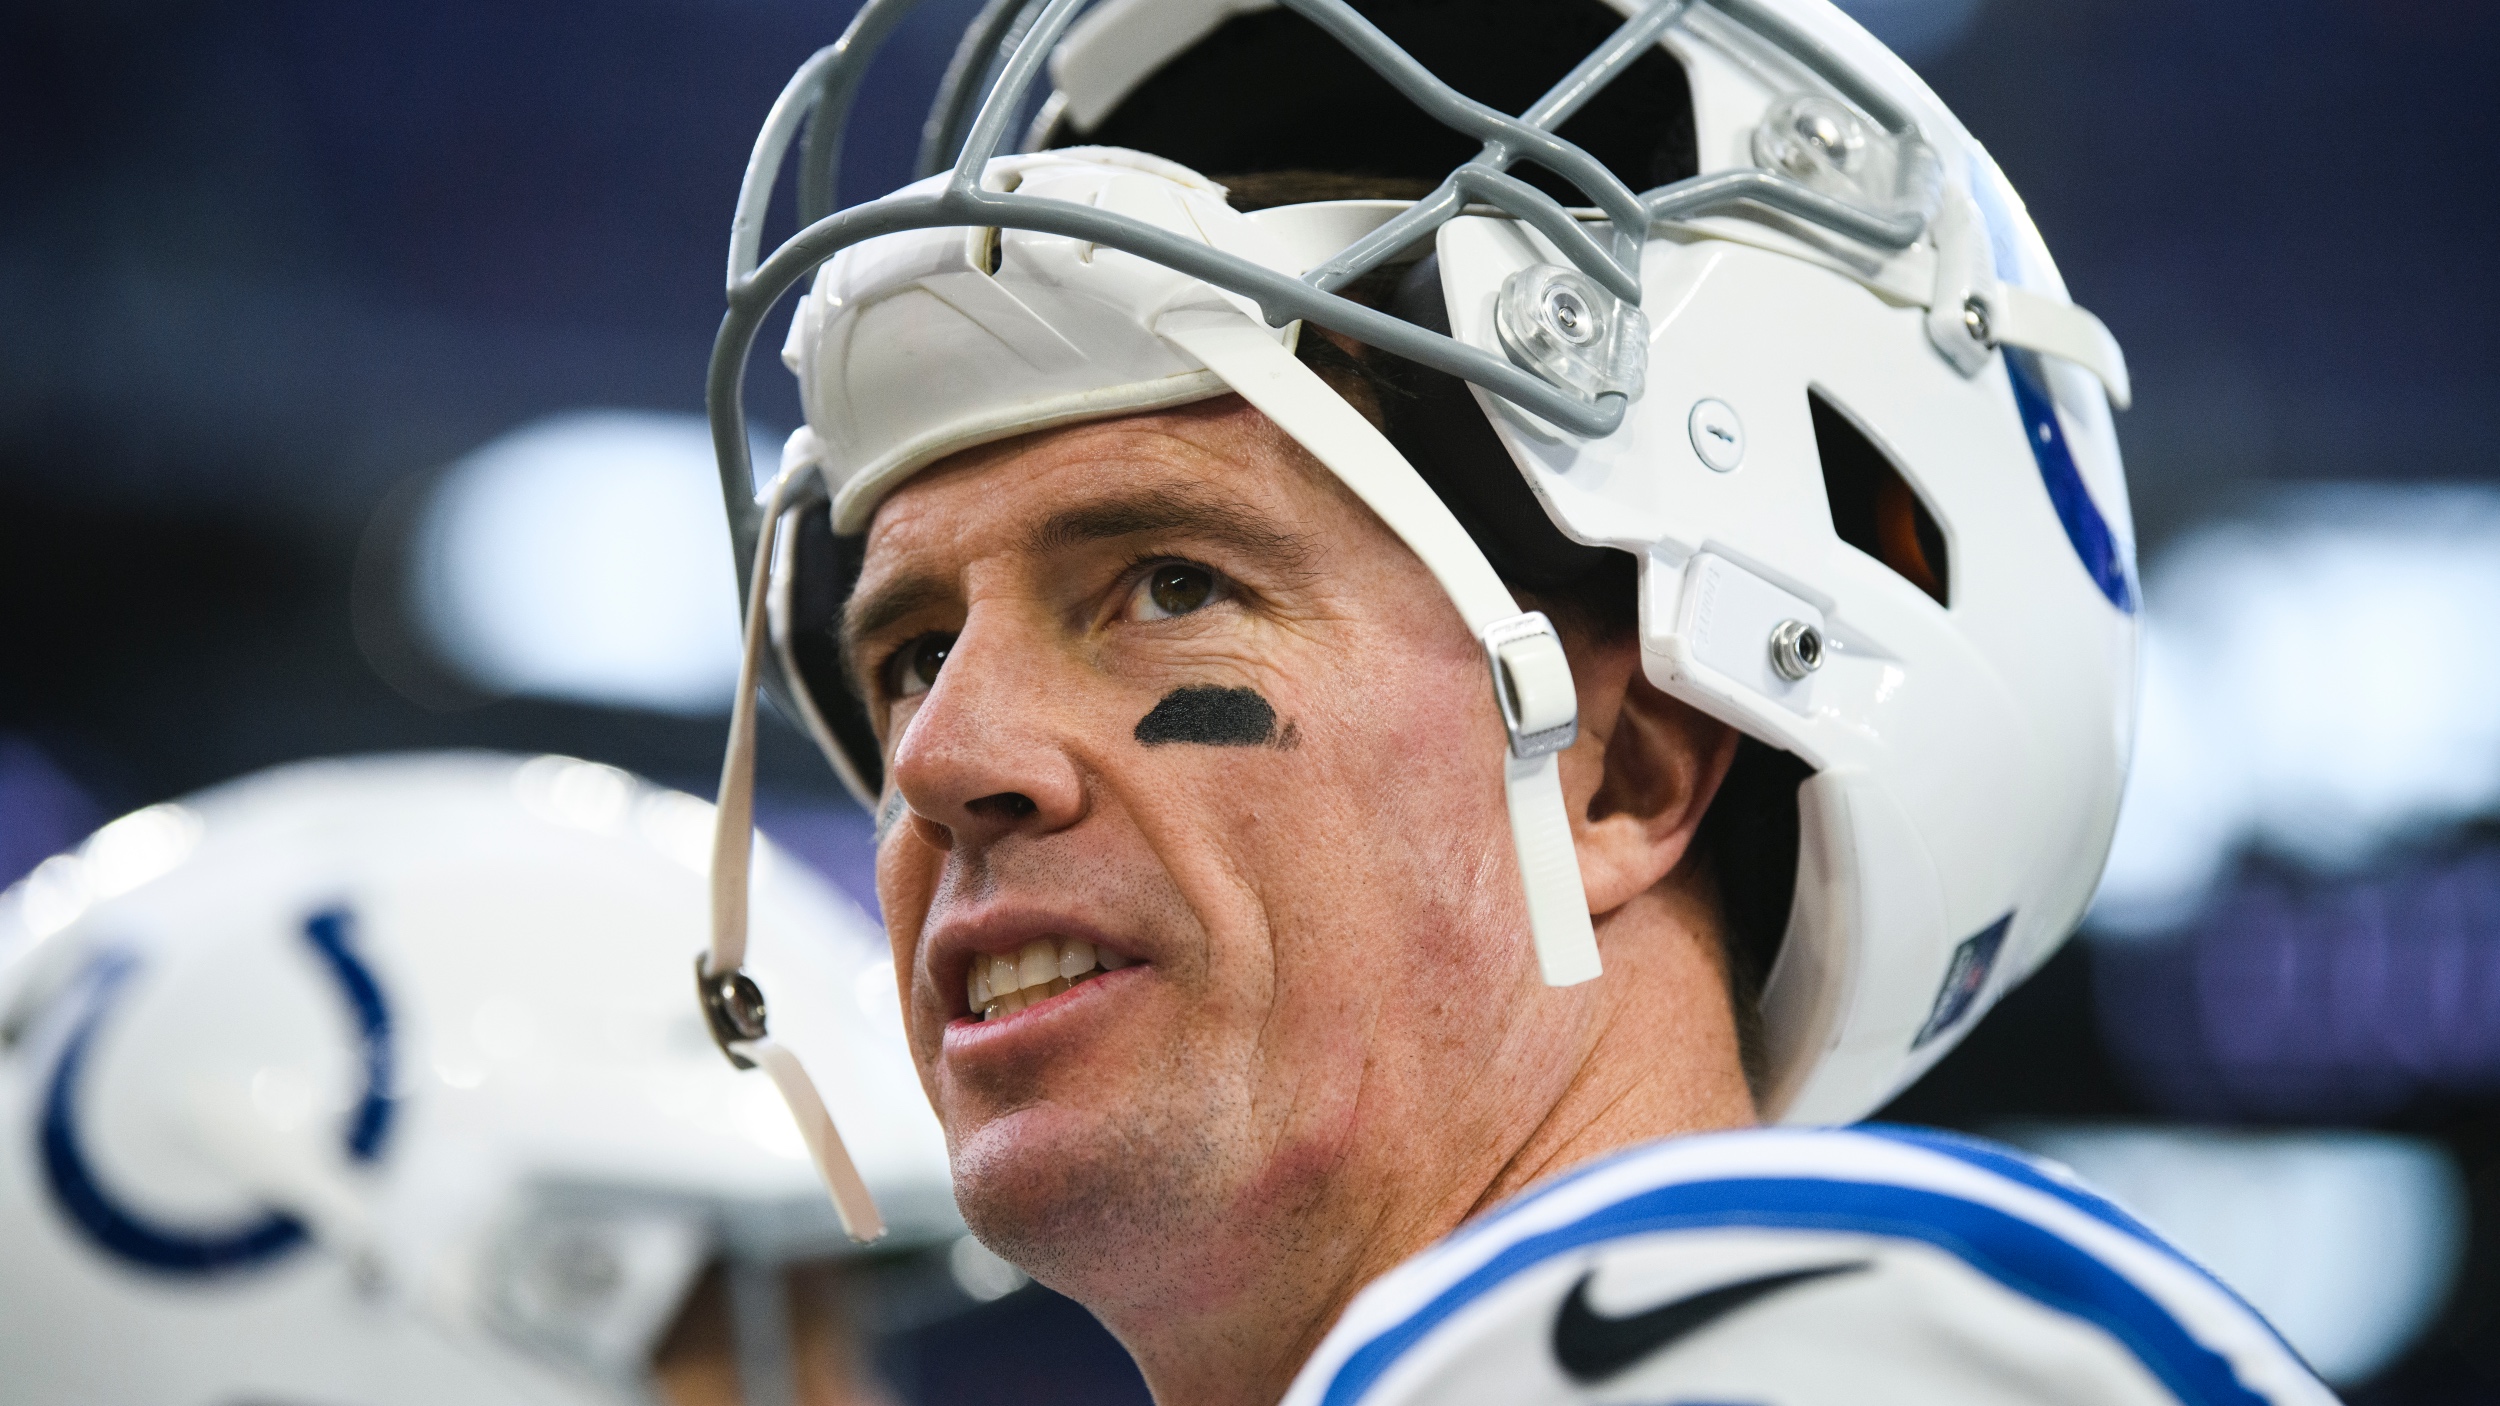 Matt Ryan Indianapolis Colts quarterback with helmet off